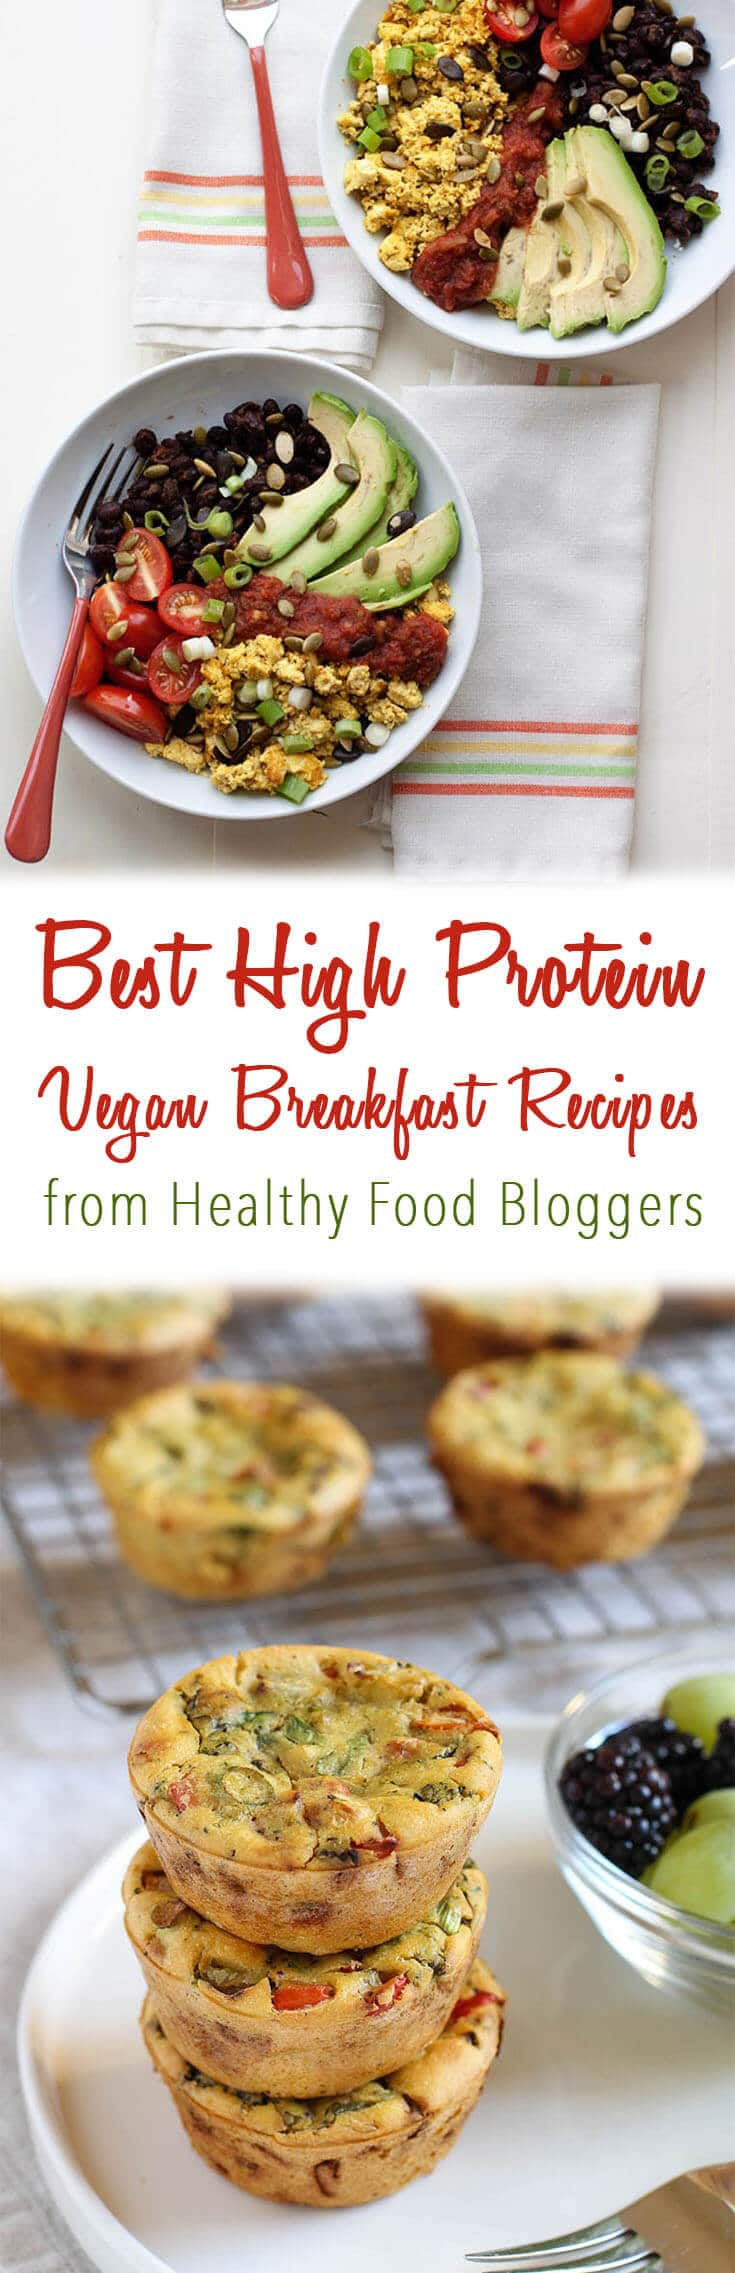 Vegan Protein Breakfast
 Best High Protein Vegan Breakfast Recipes from Healthy